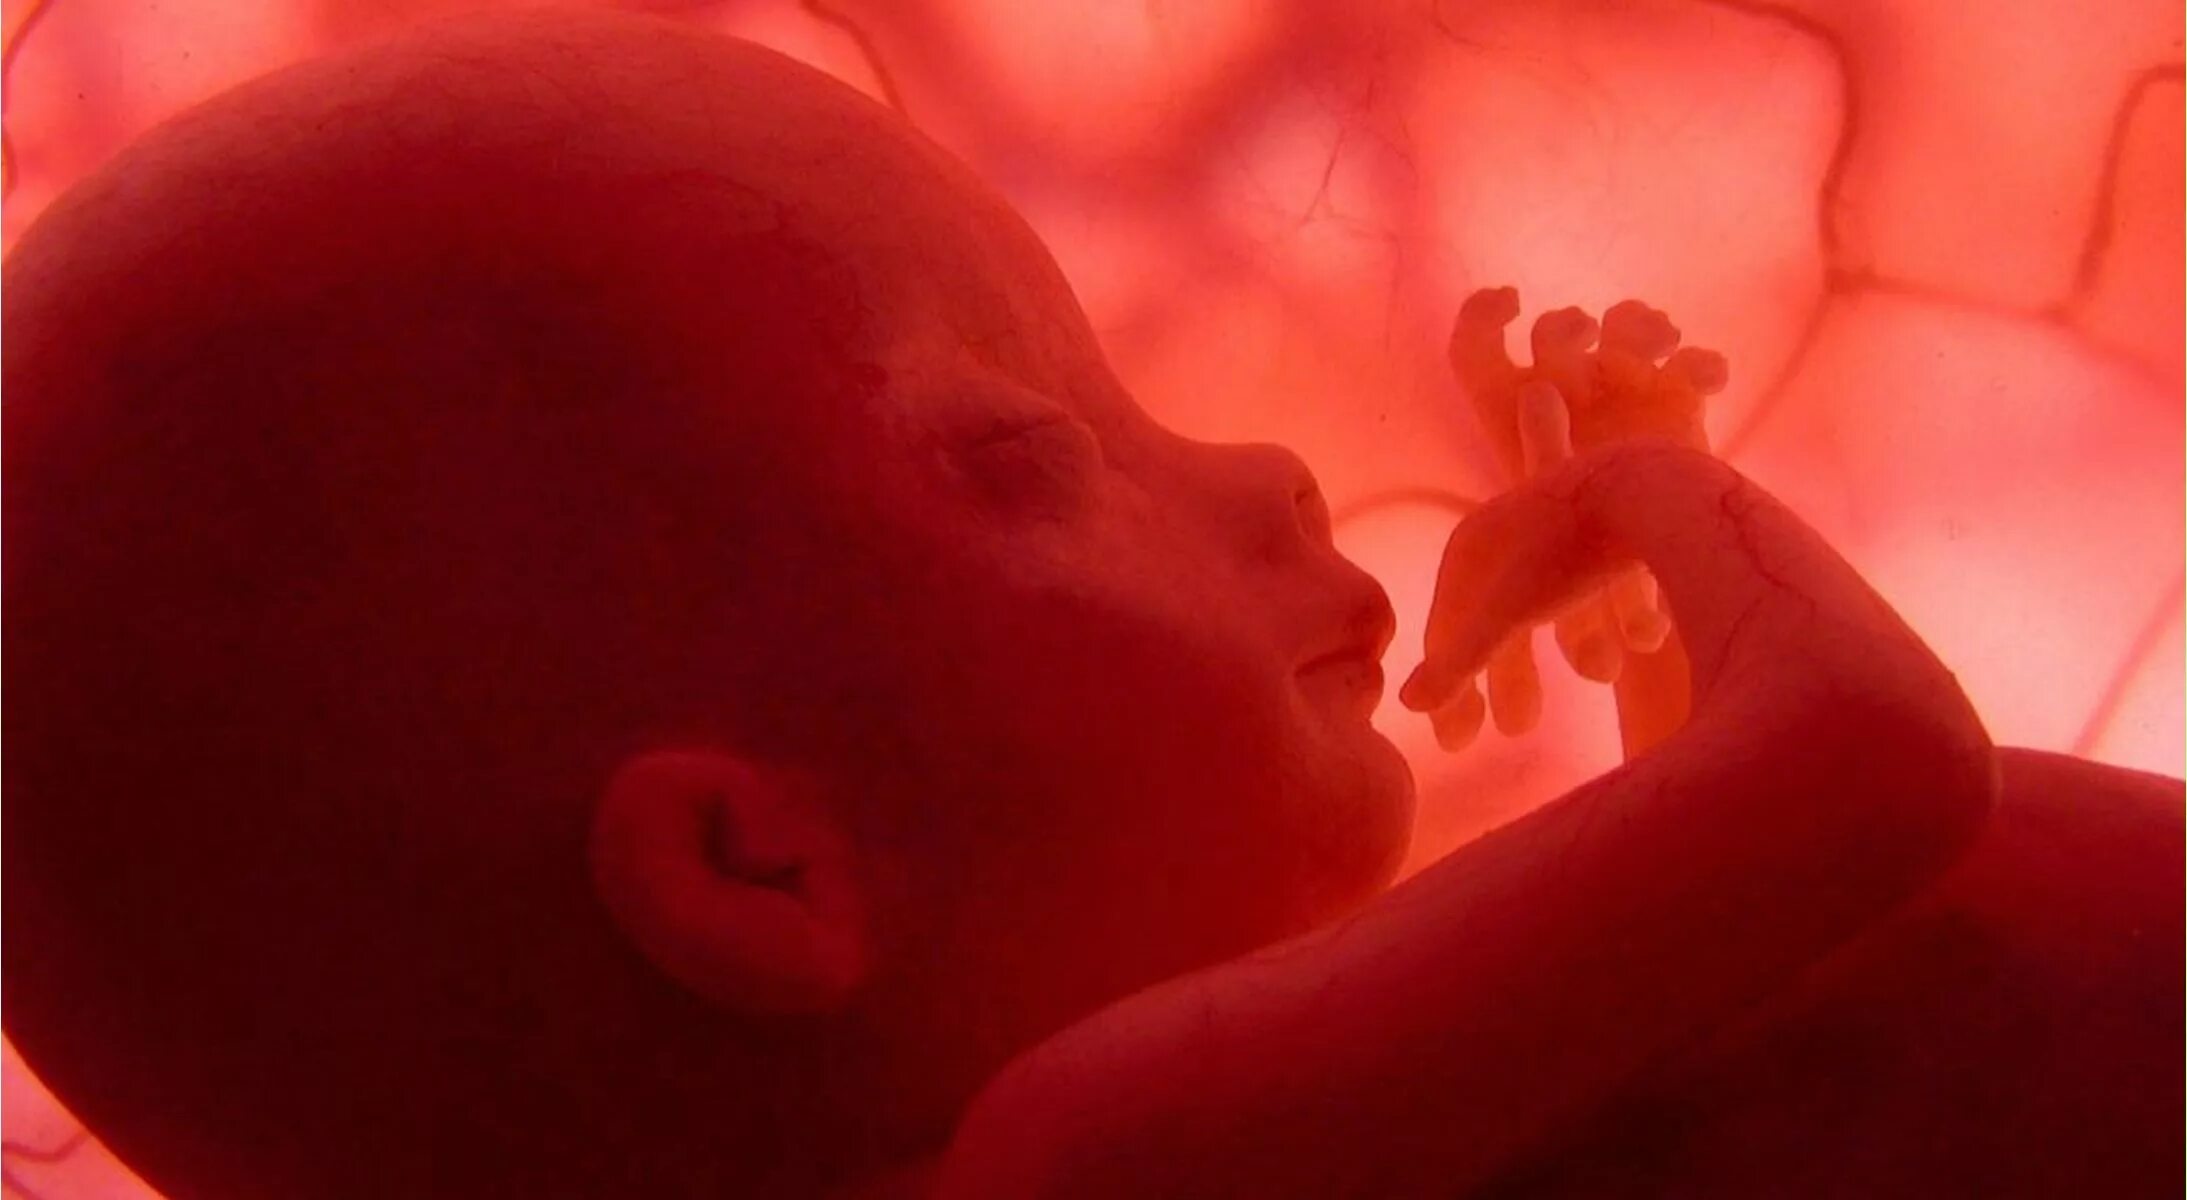 Внутриутробная жизнь ребенка. Младенец в утробе матери. Ребенок внутри матери. Rebenok v ugrobe materi.